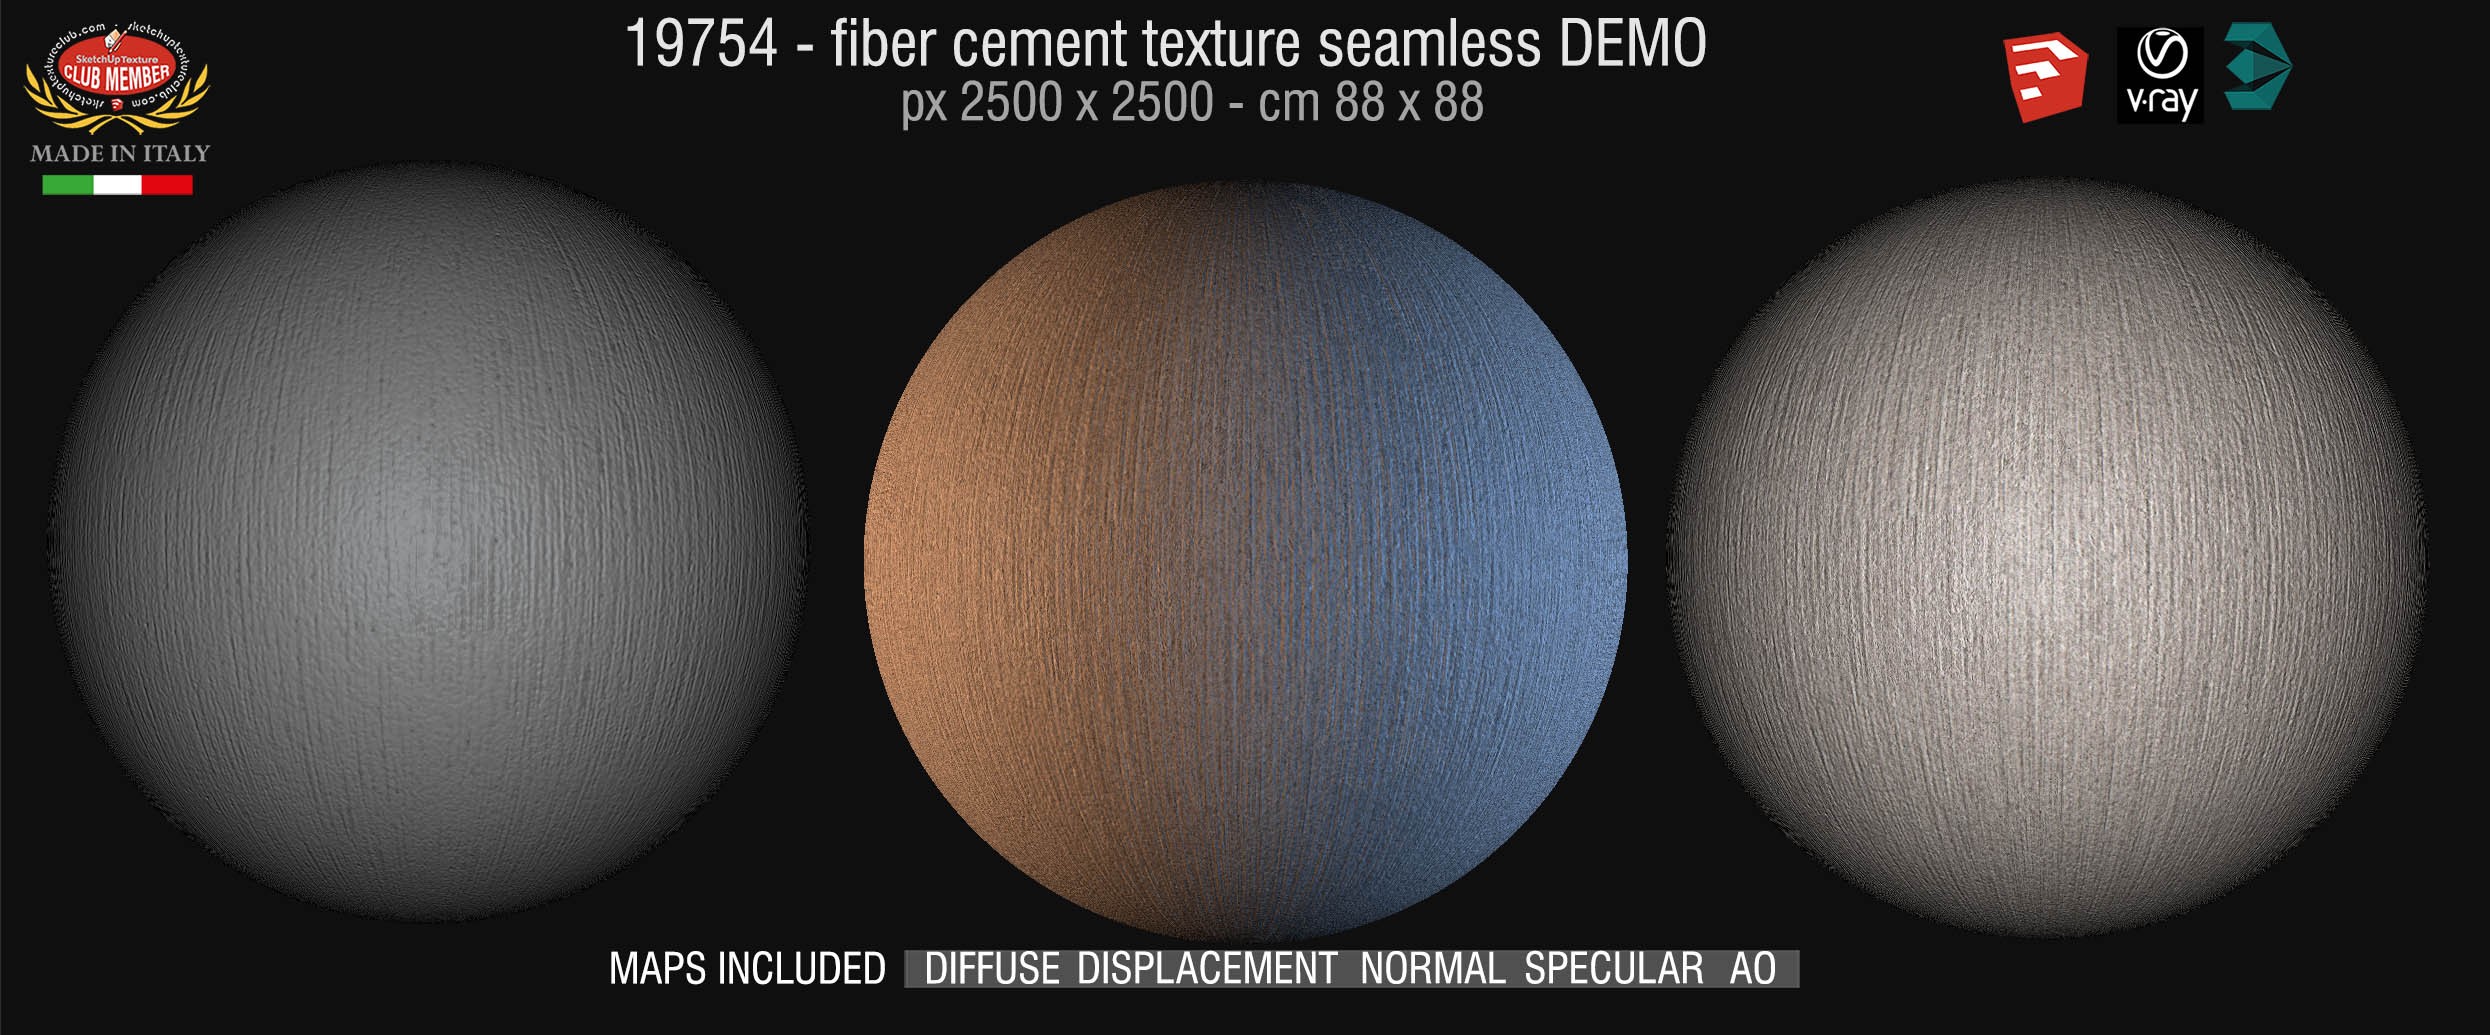 19754 HR Fiber cement texture + maps DEMO